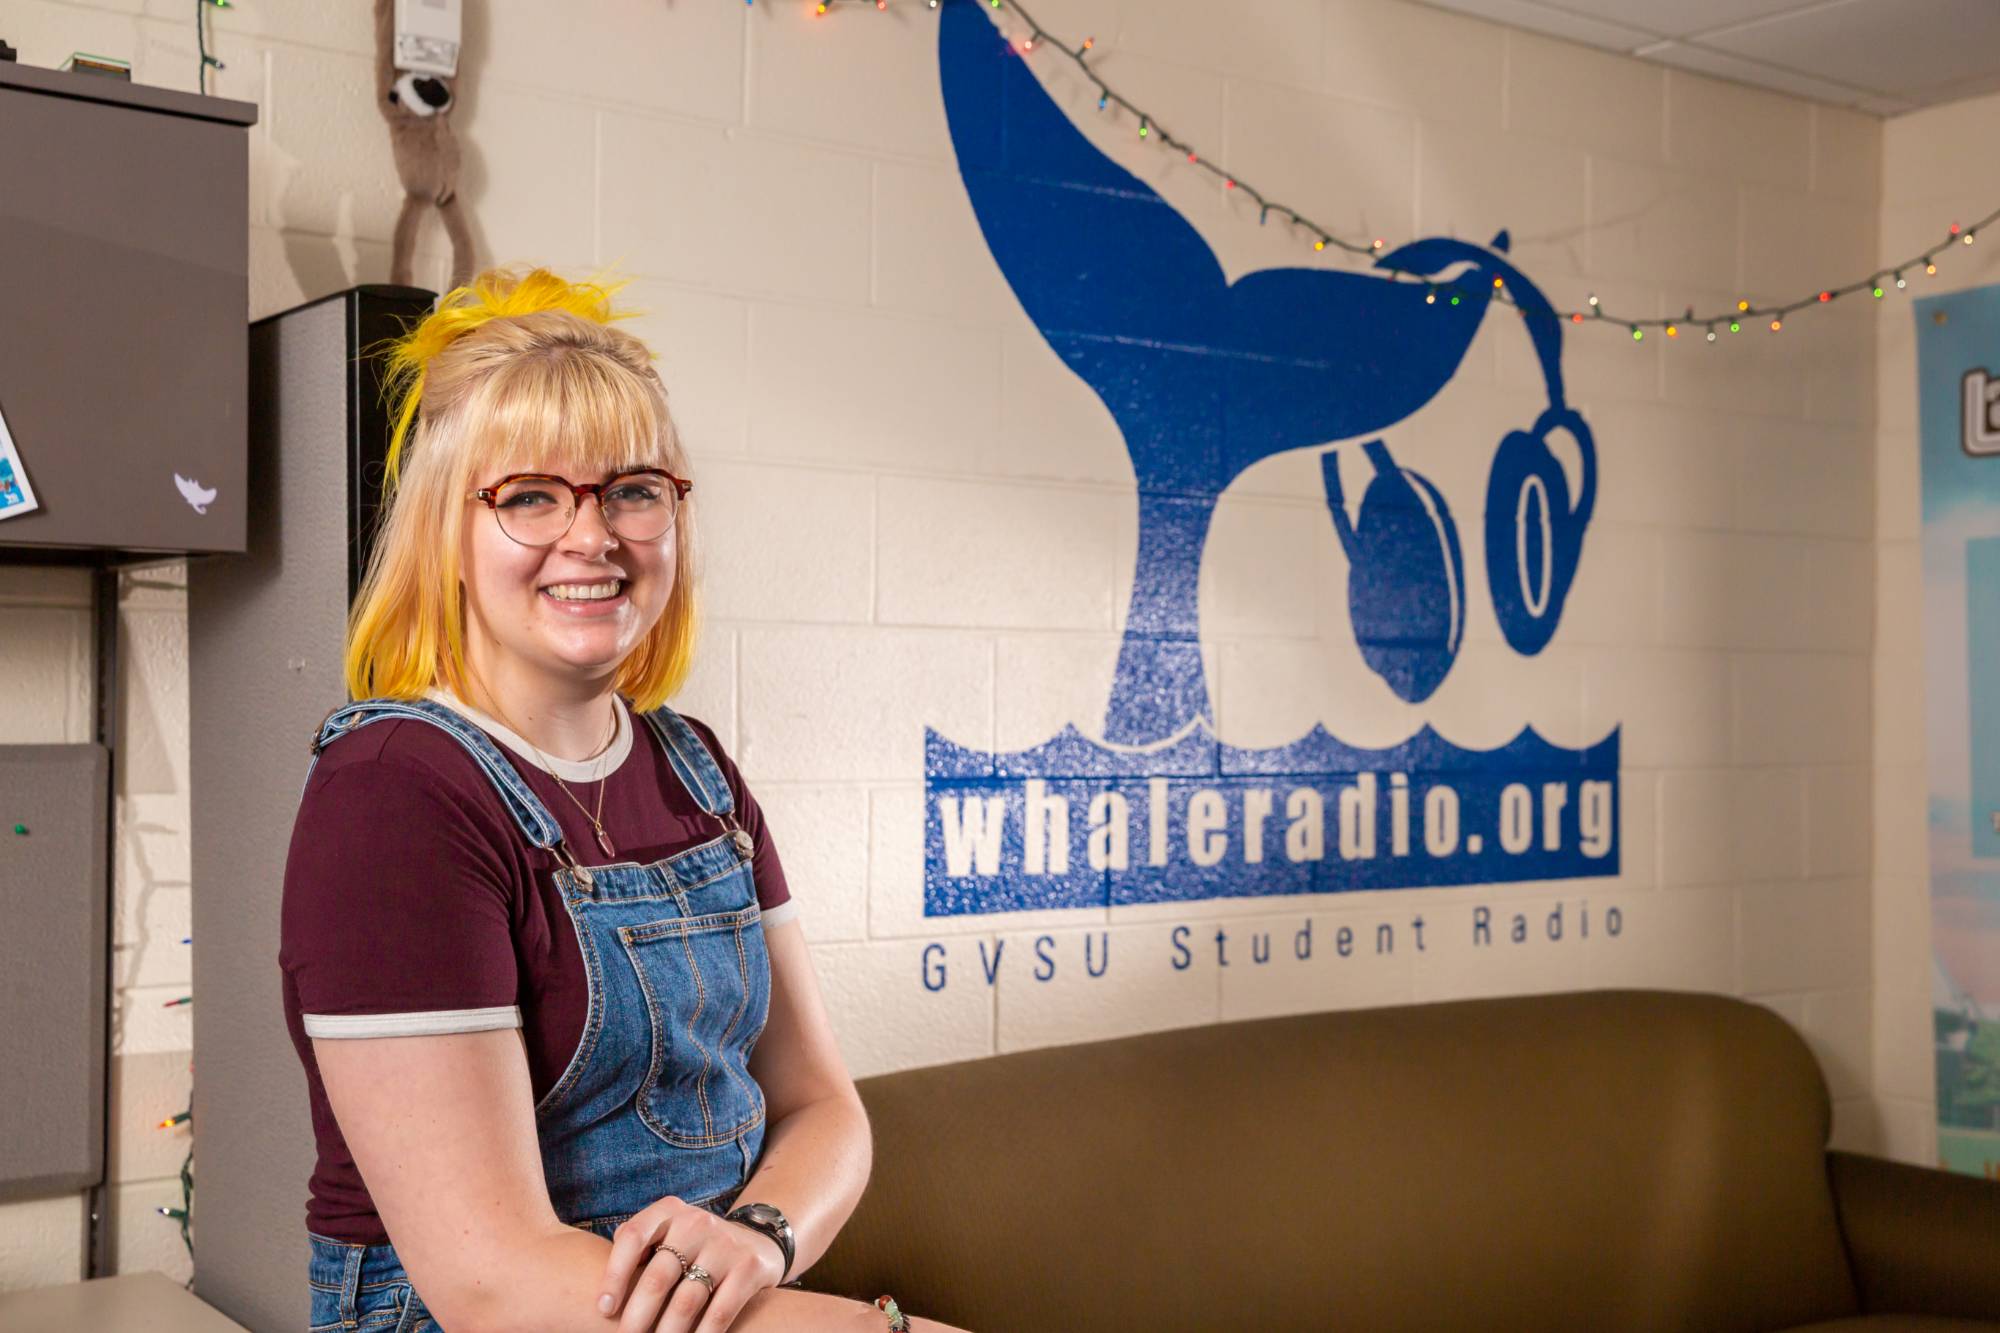 Rachel Syrba in the Whale Radio station.